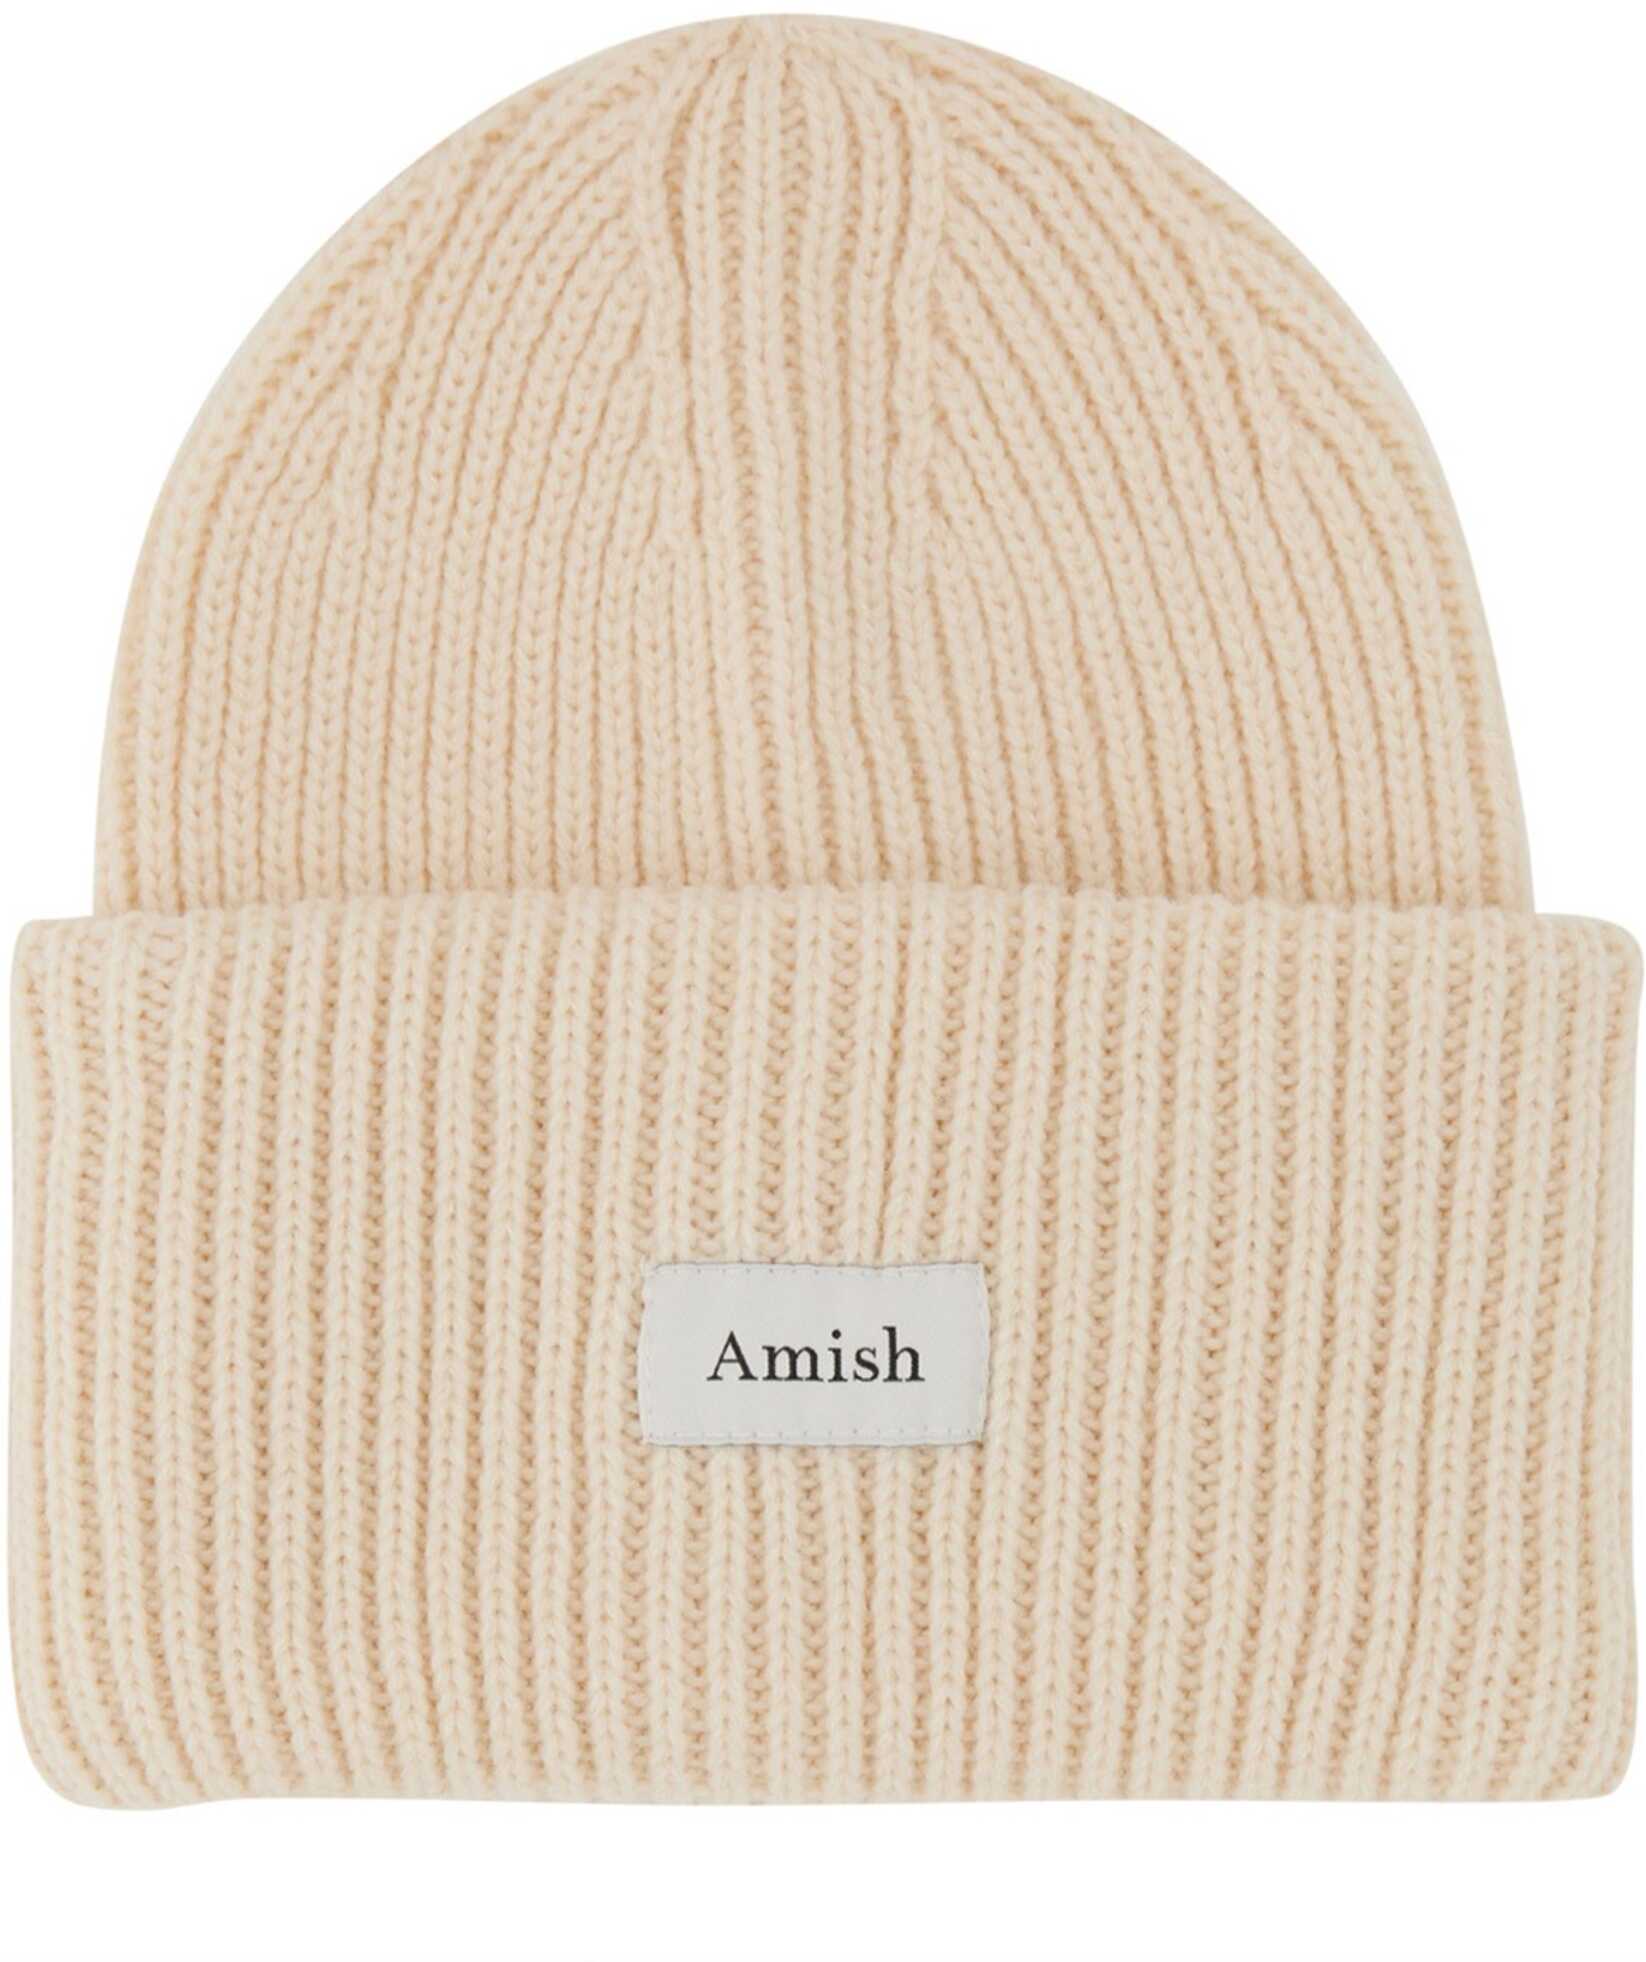 AMISH Beanie Hat With Logo WHITE